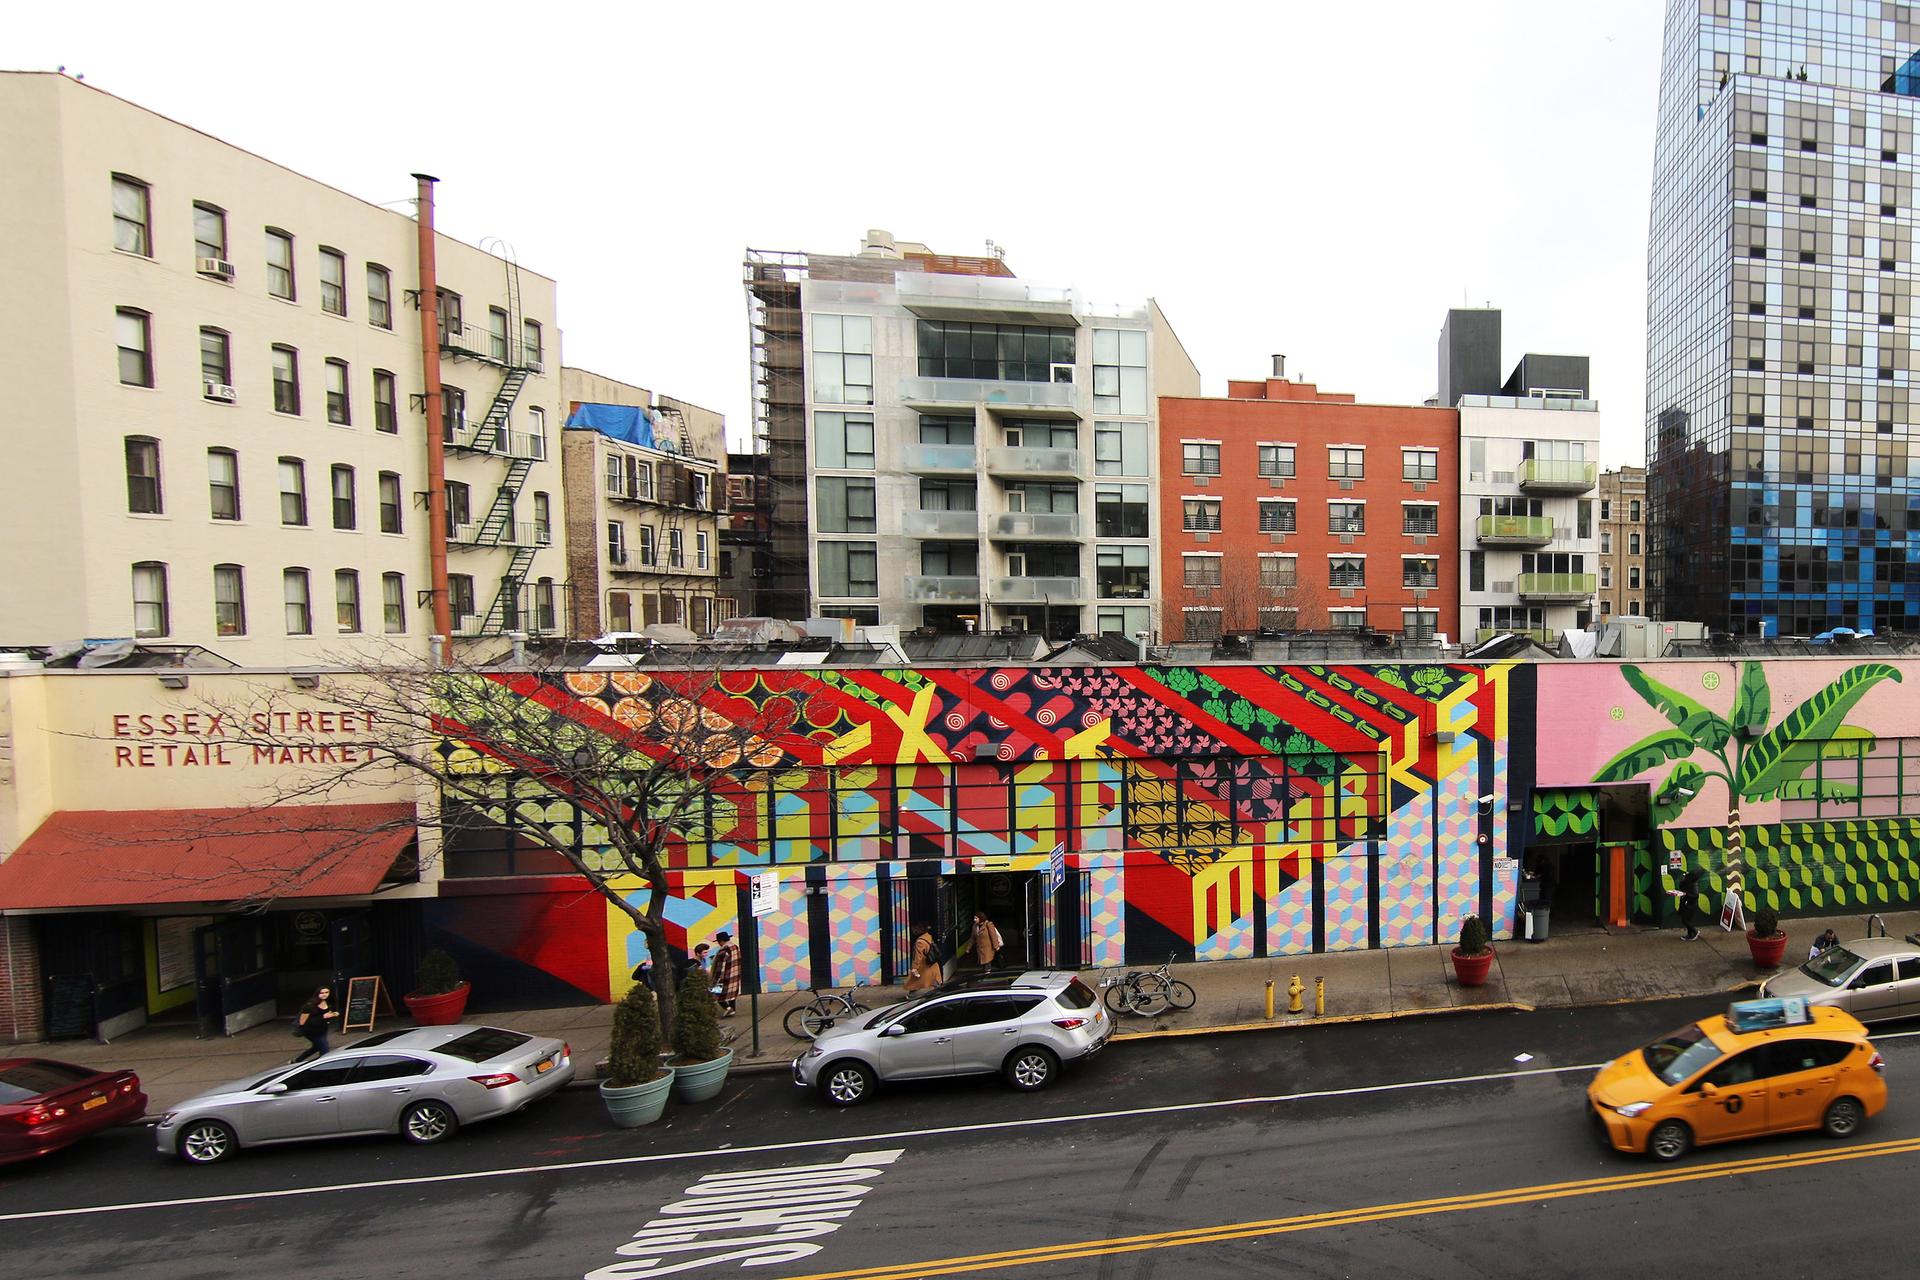 Essex Street Market, Nina LoSchiavo,  Lower East Side Partnership, Manhattan, Taxi, NYC, 